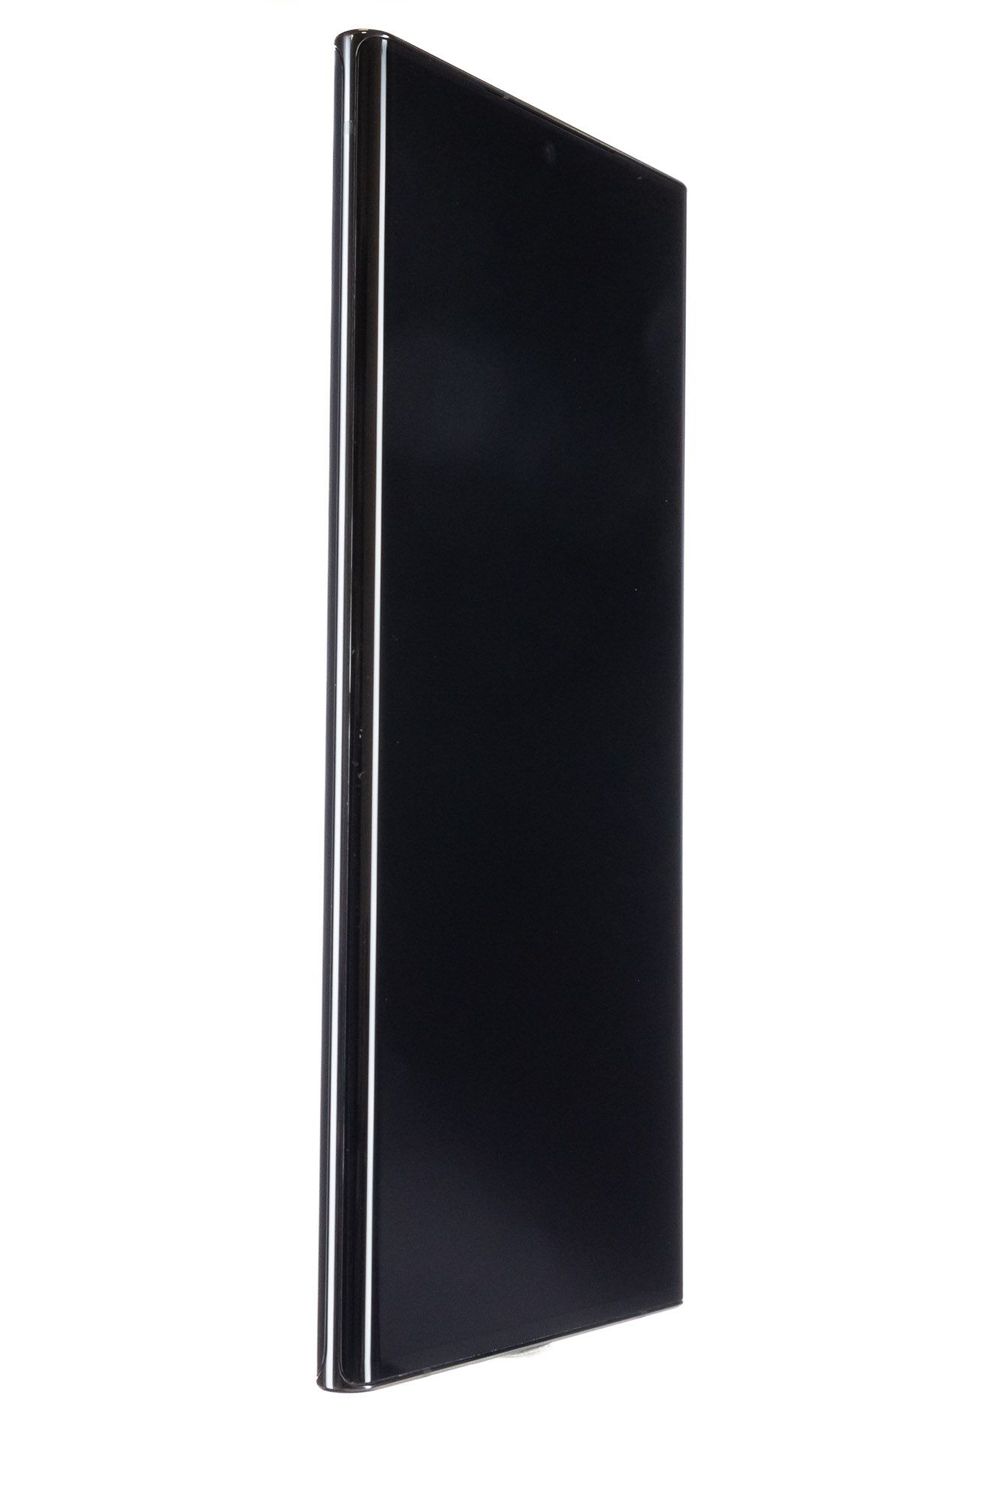 Mobiltelefon Samsung Galaxy Note 20 Ultra 5G, Black, 256 GB, Bun